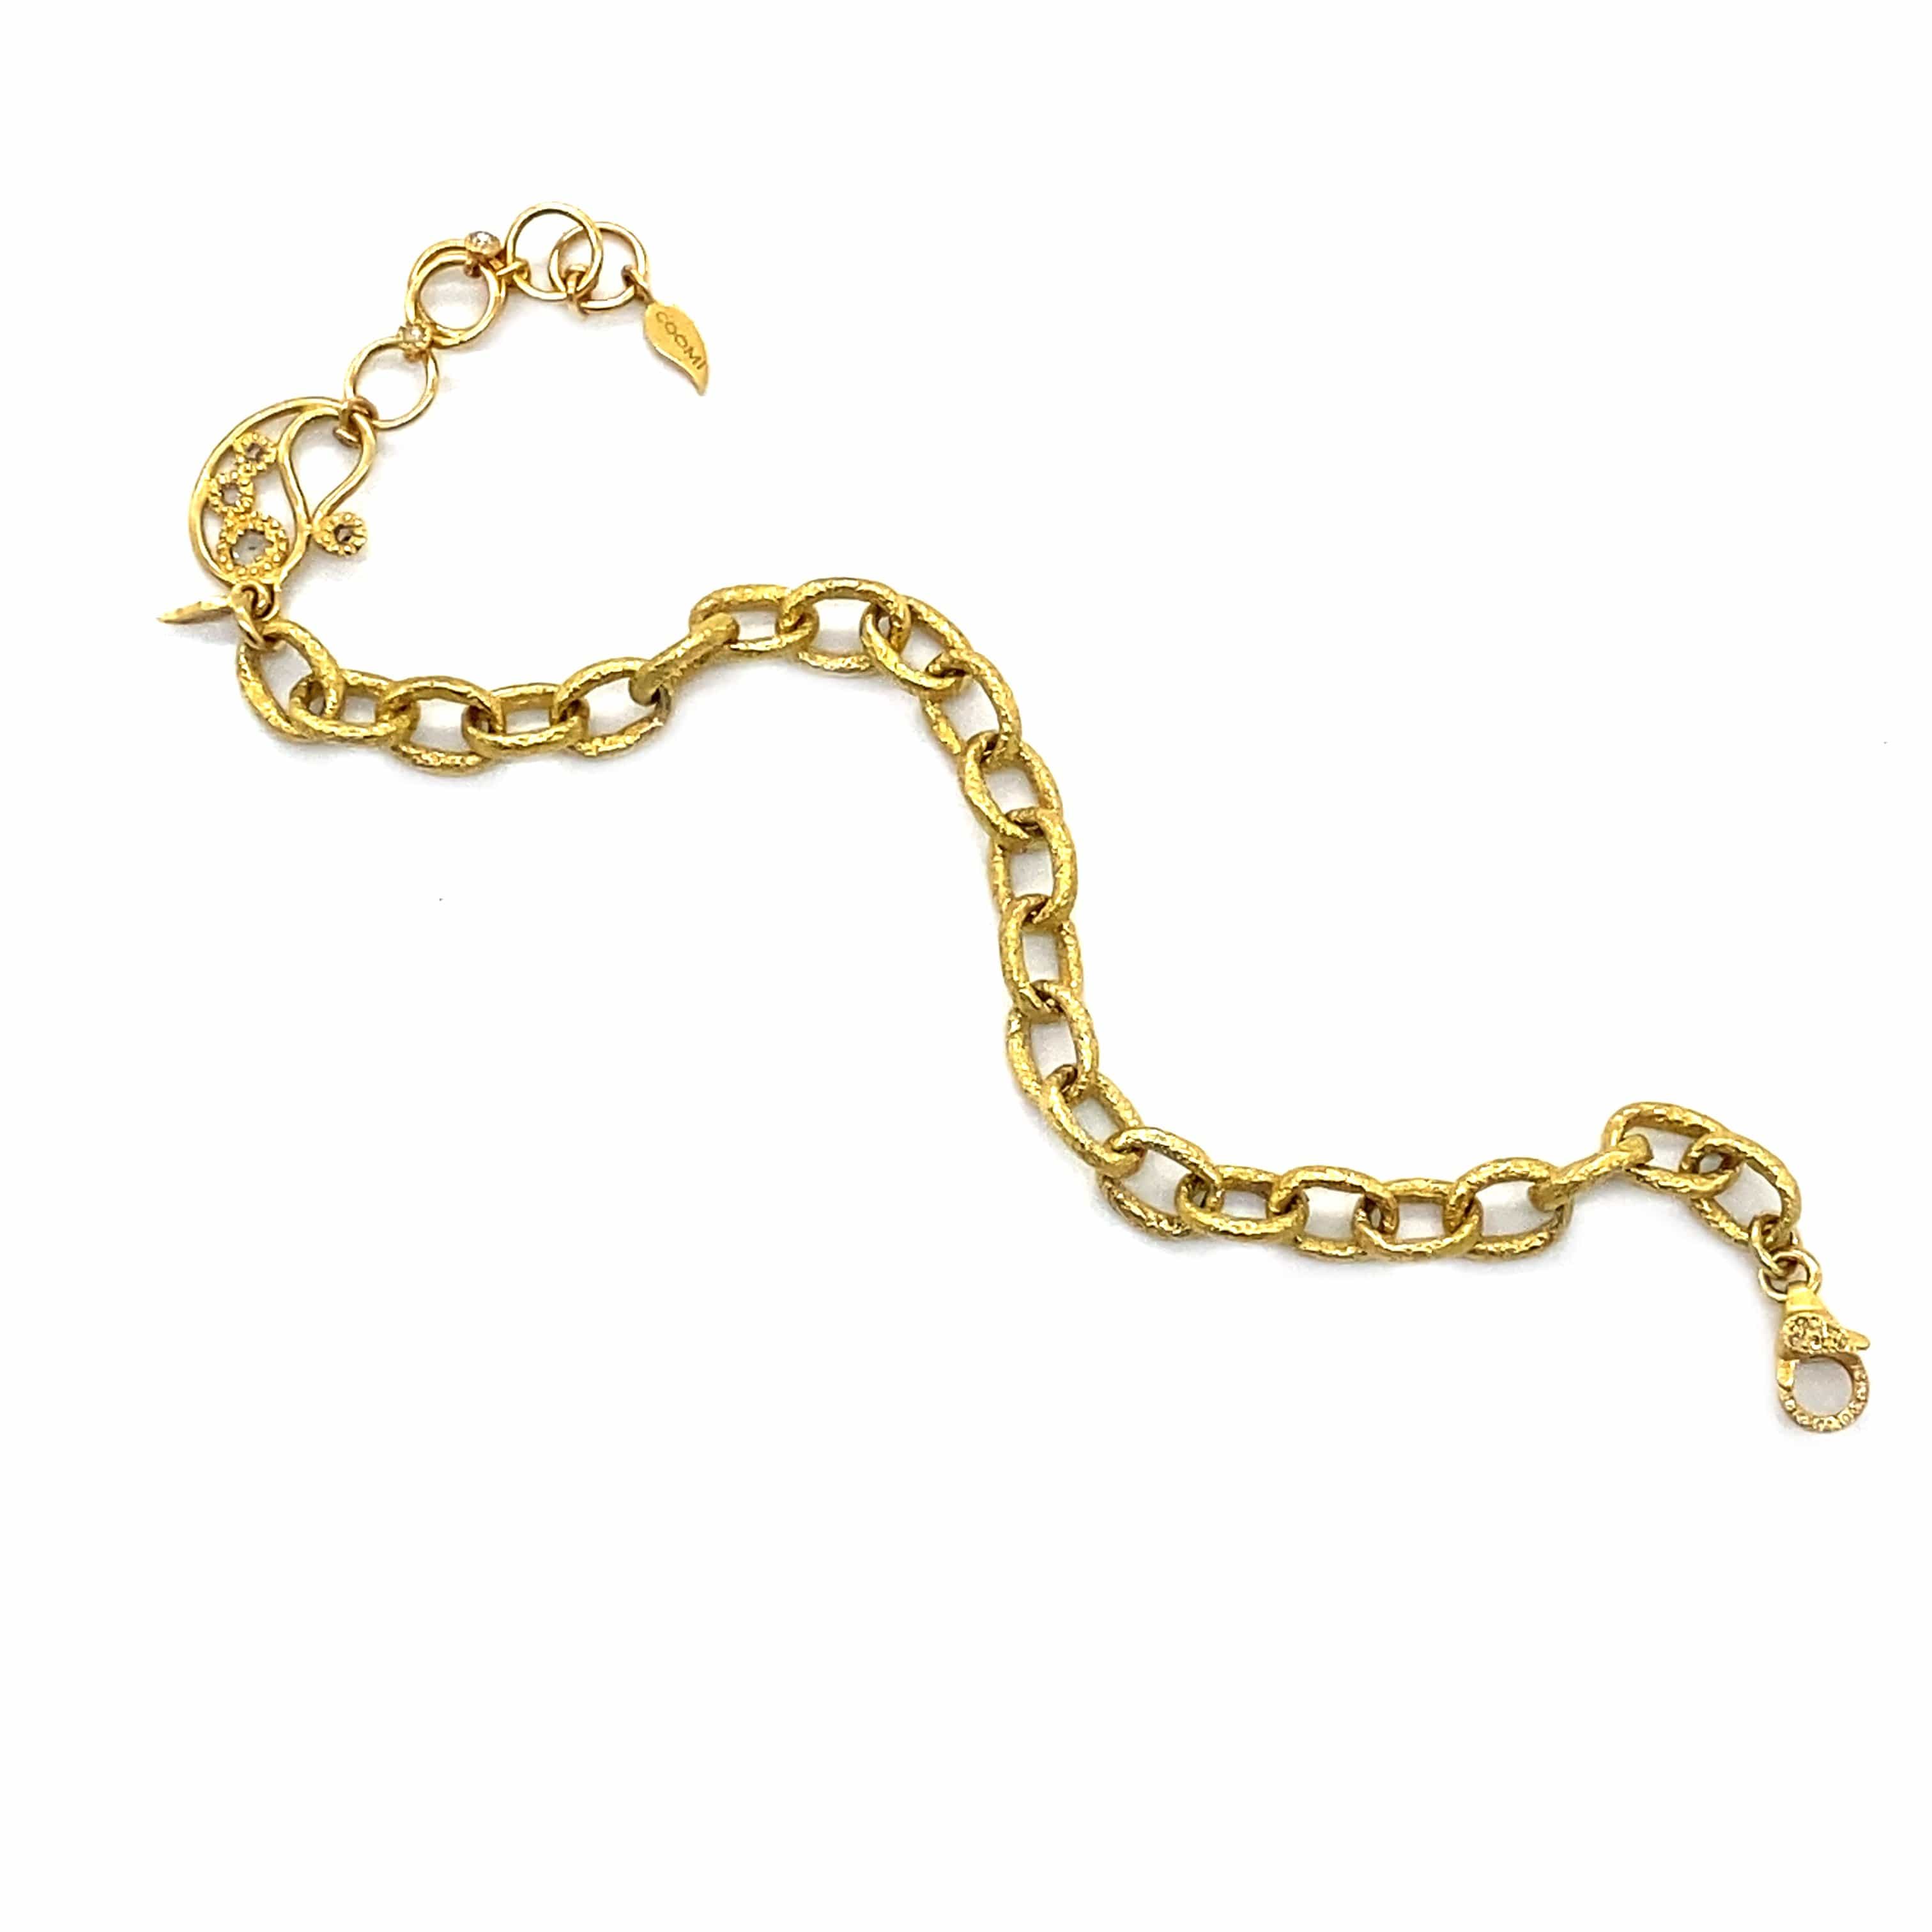 Antiquity 20K Yellow Gold Link Bracelet - 7